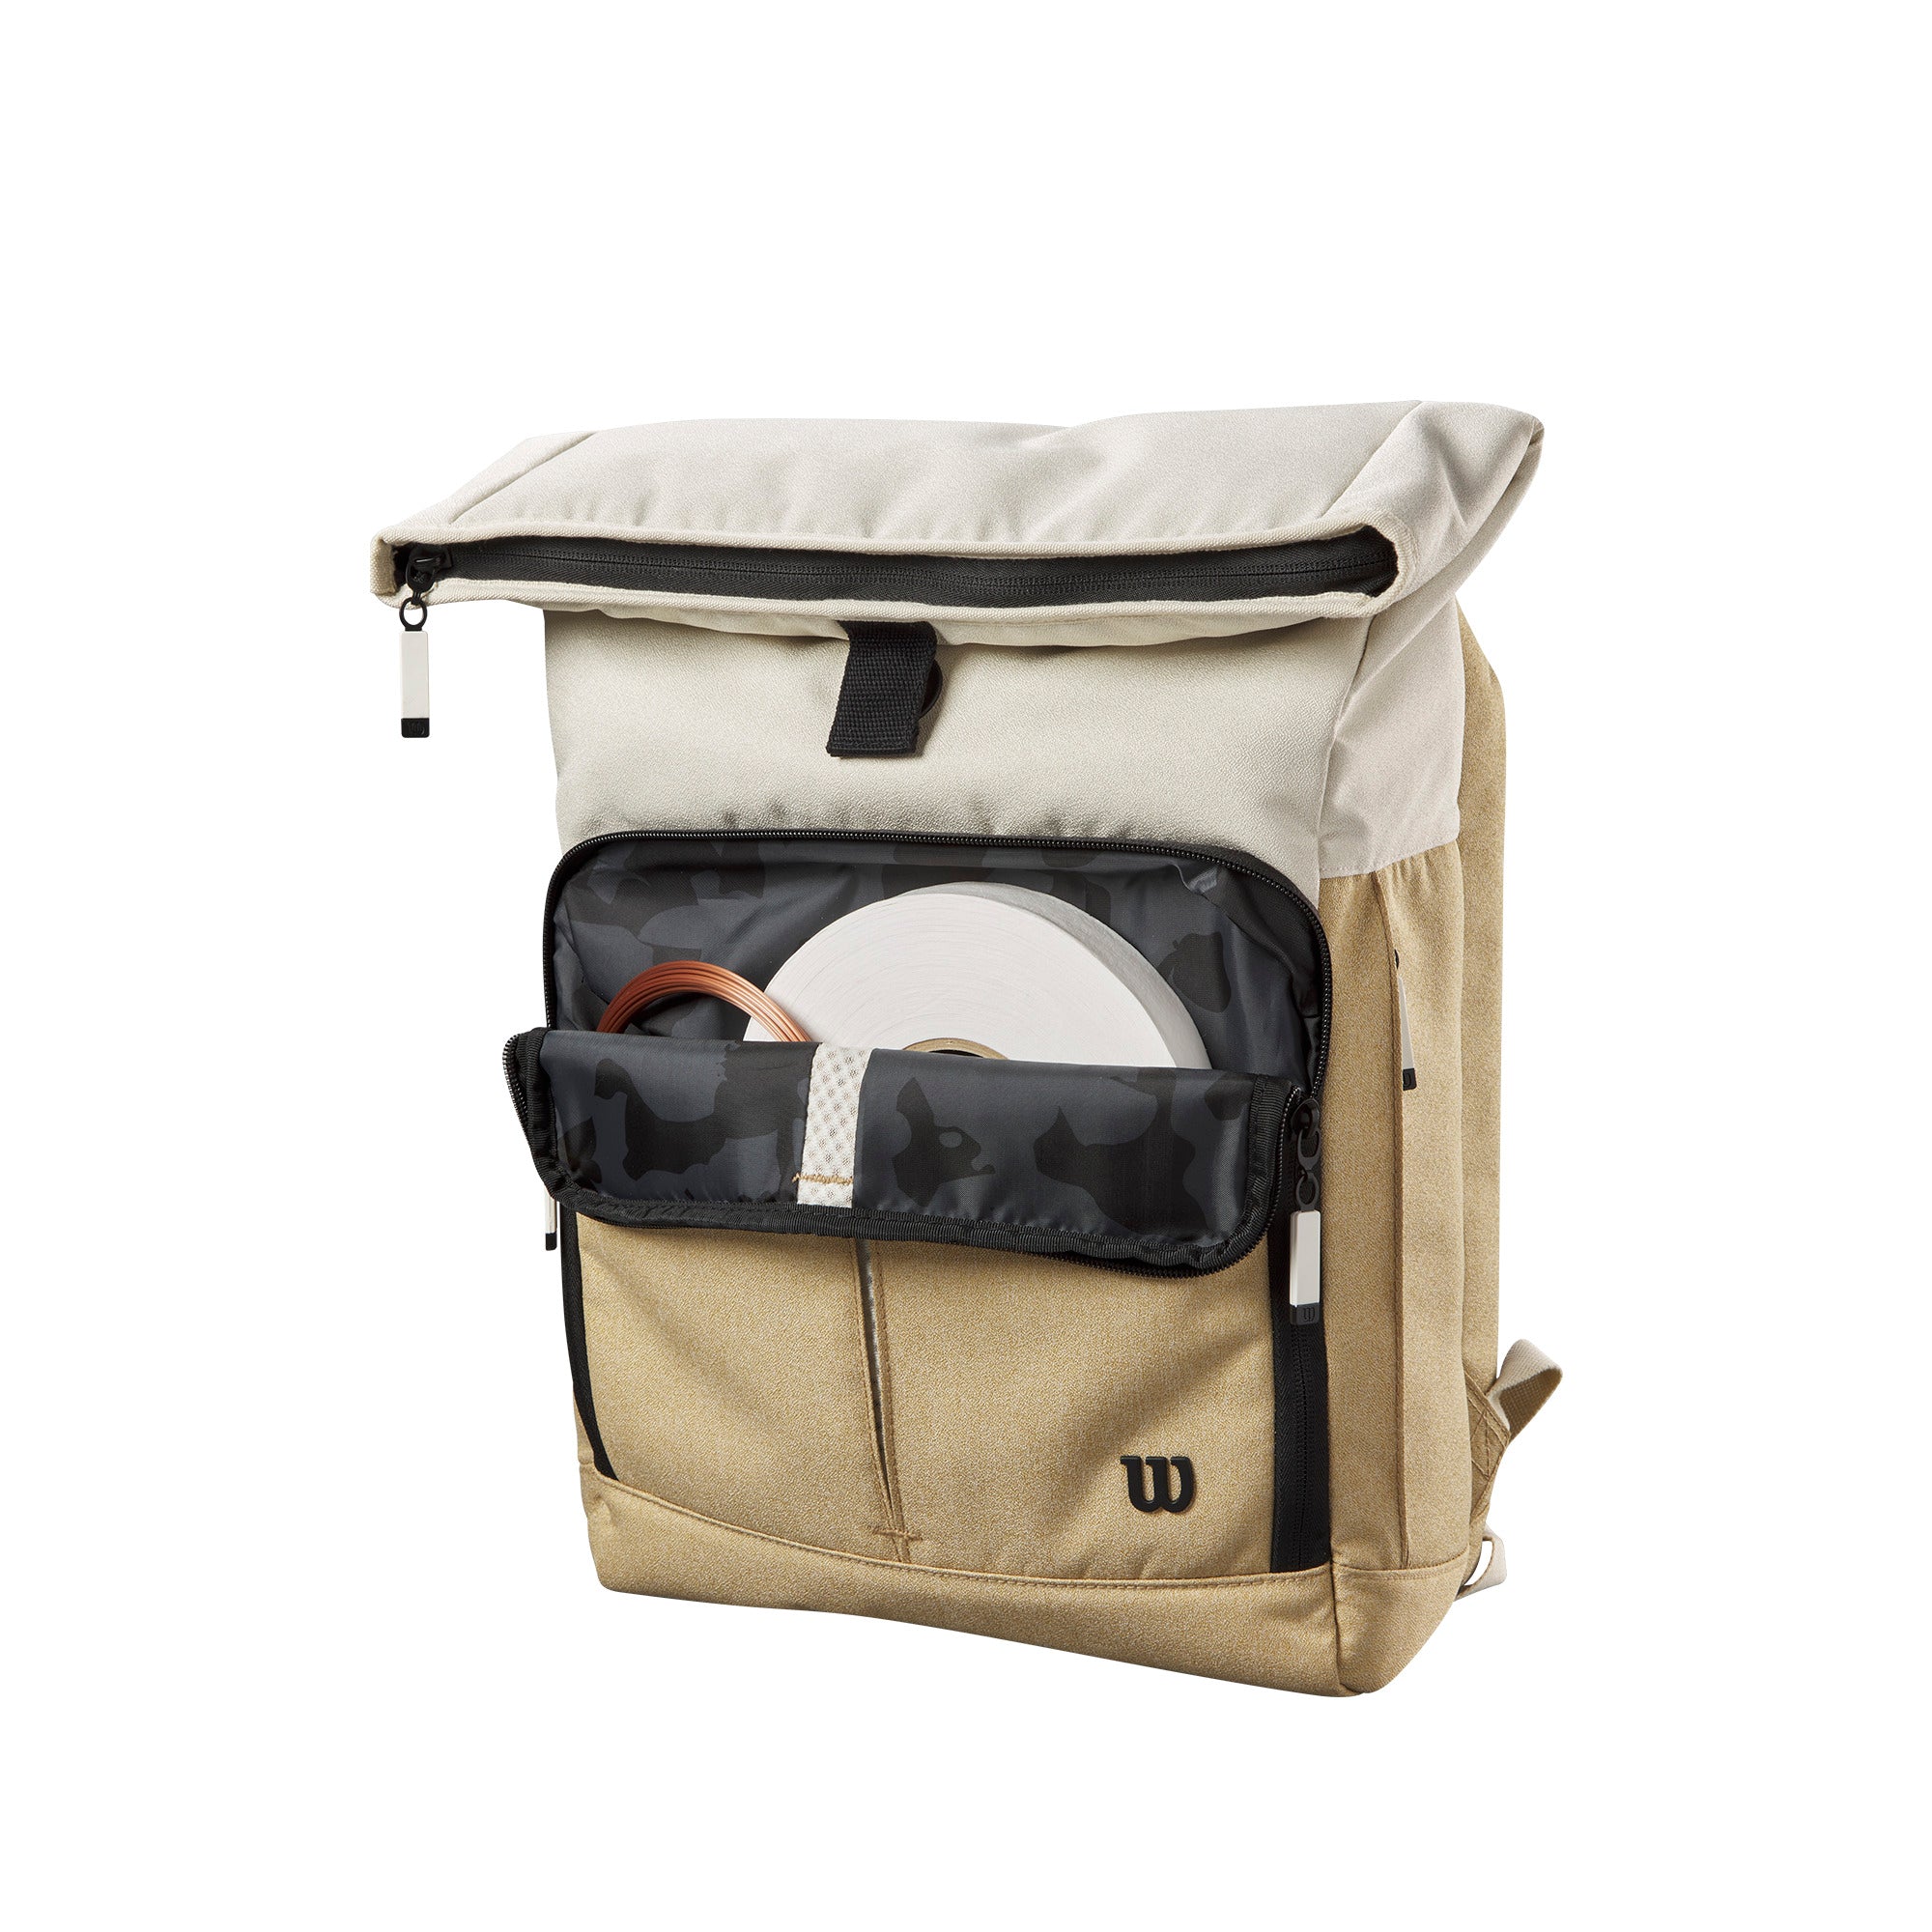 Wilson Lifestyle Foldover Backpack - Khaki/Off White